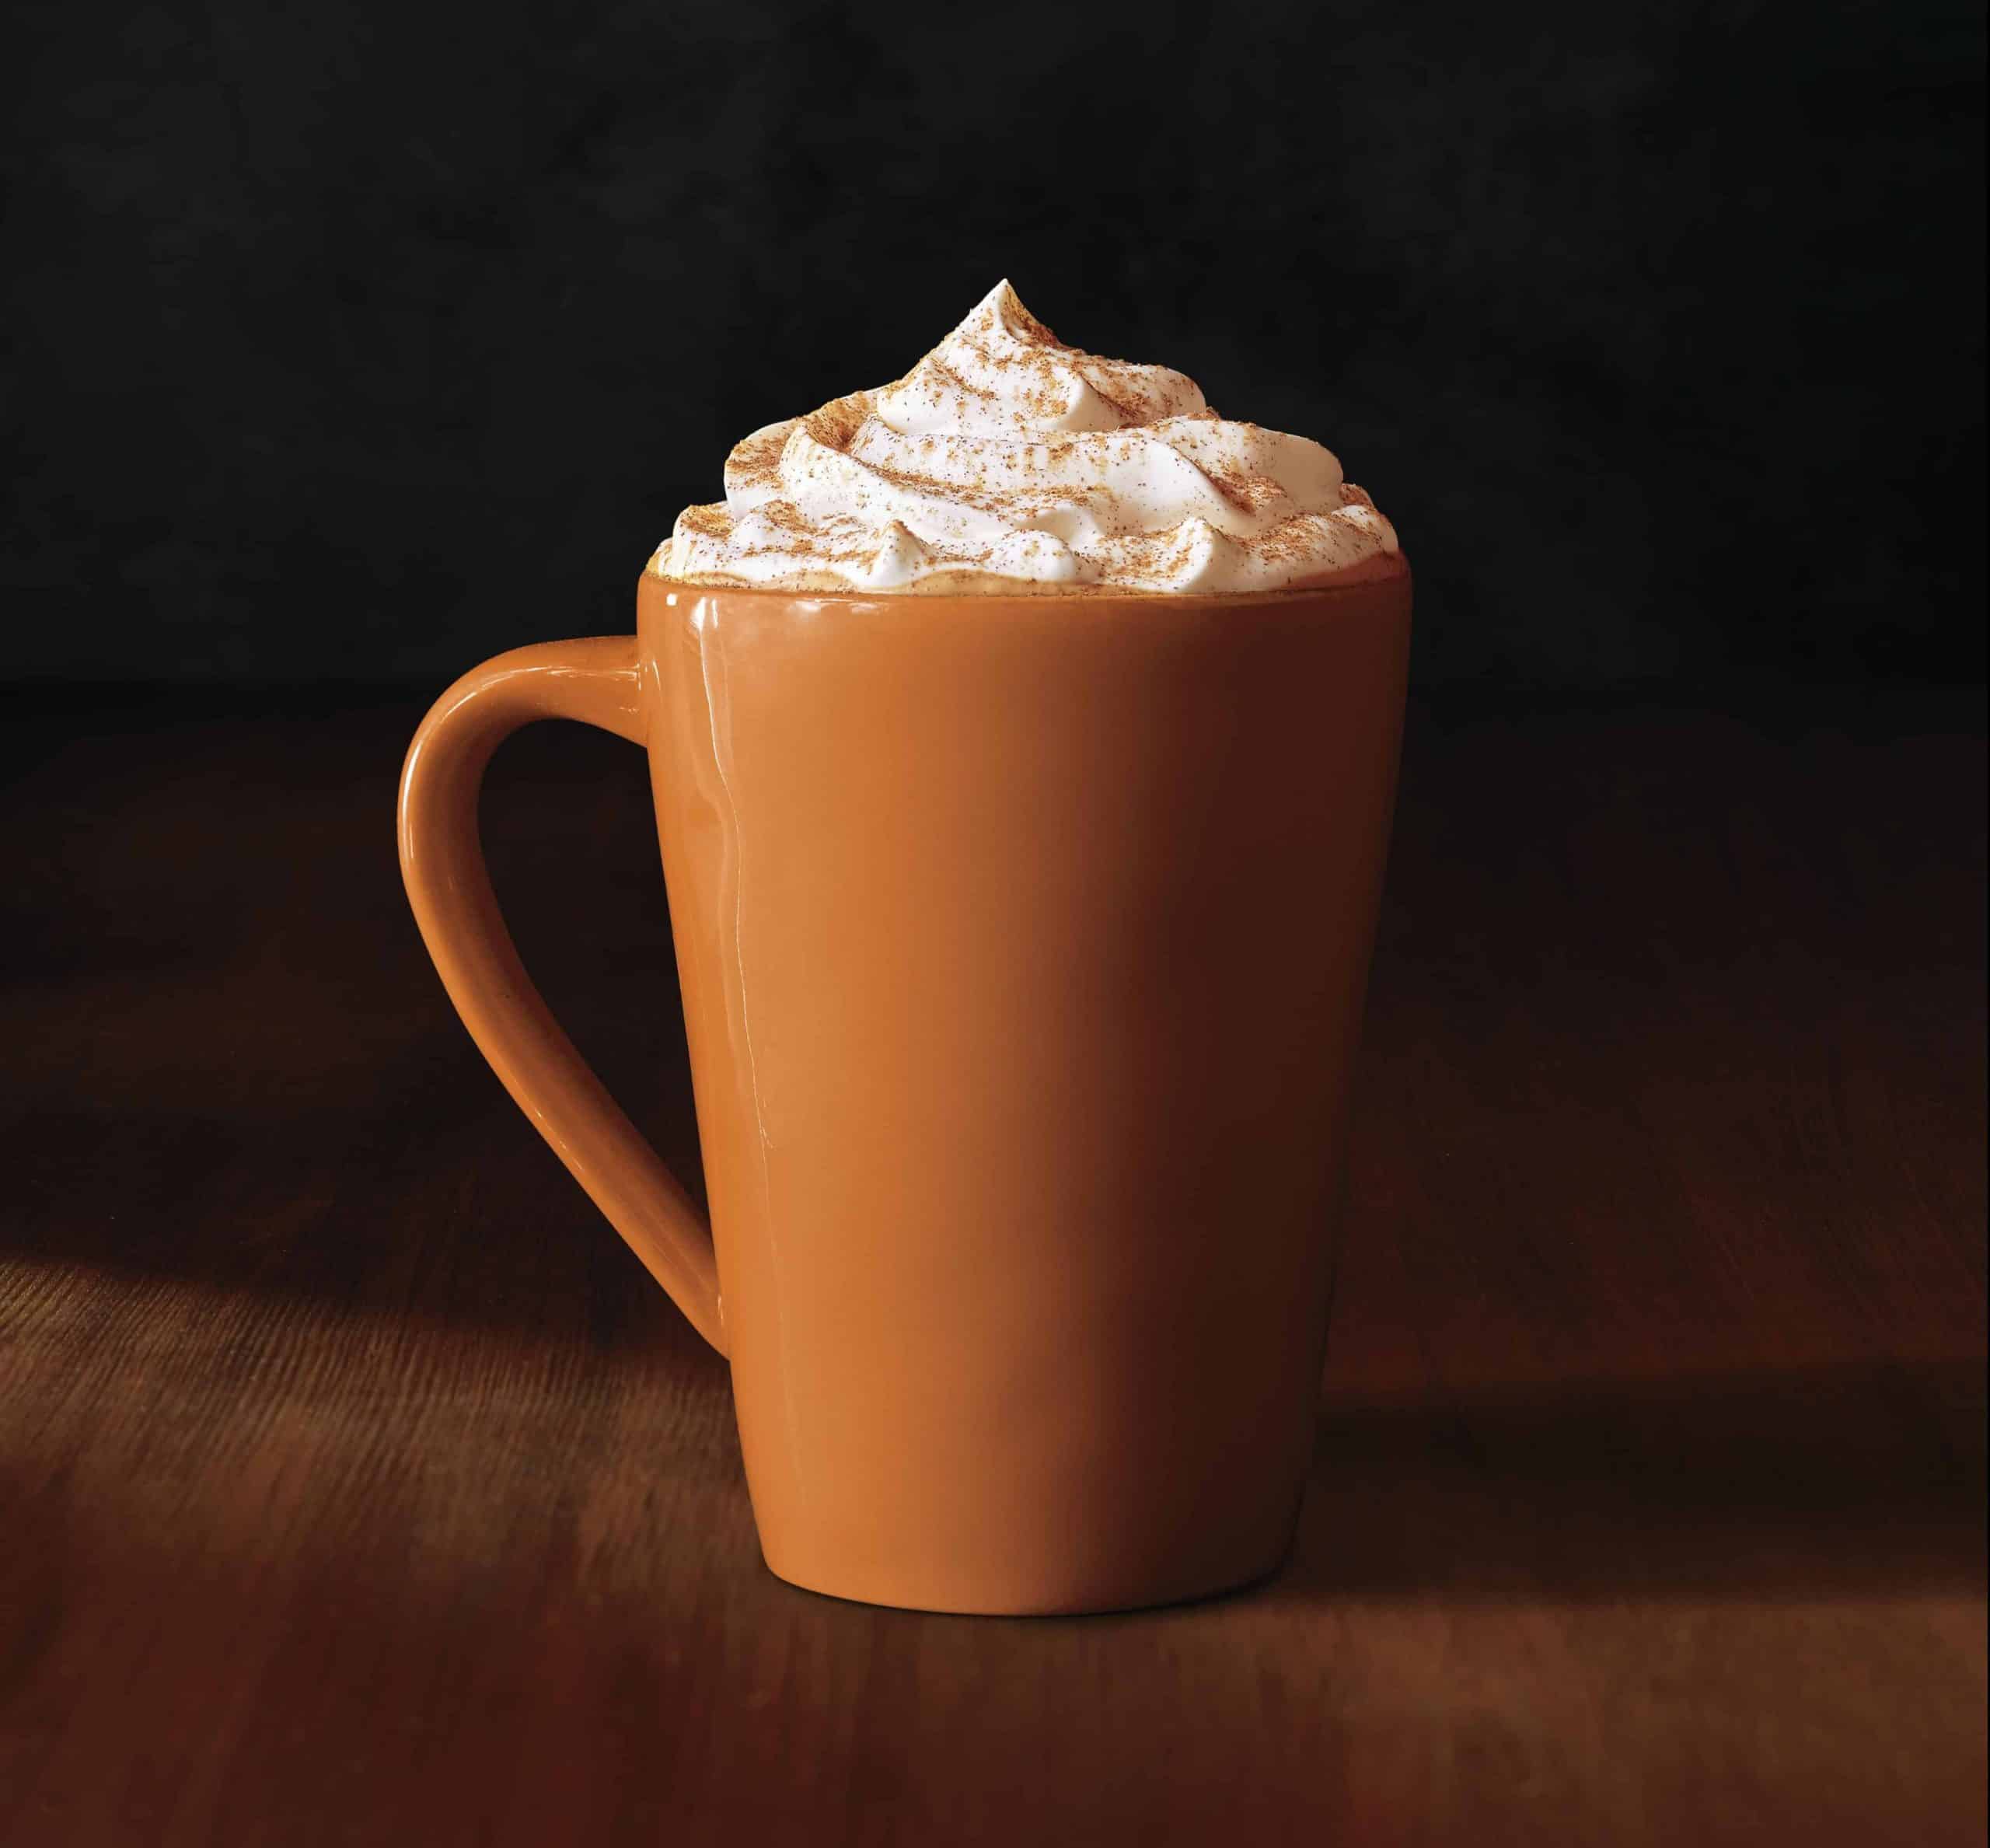 Is Starbucks pumpkin spice latte gluten free?